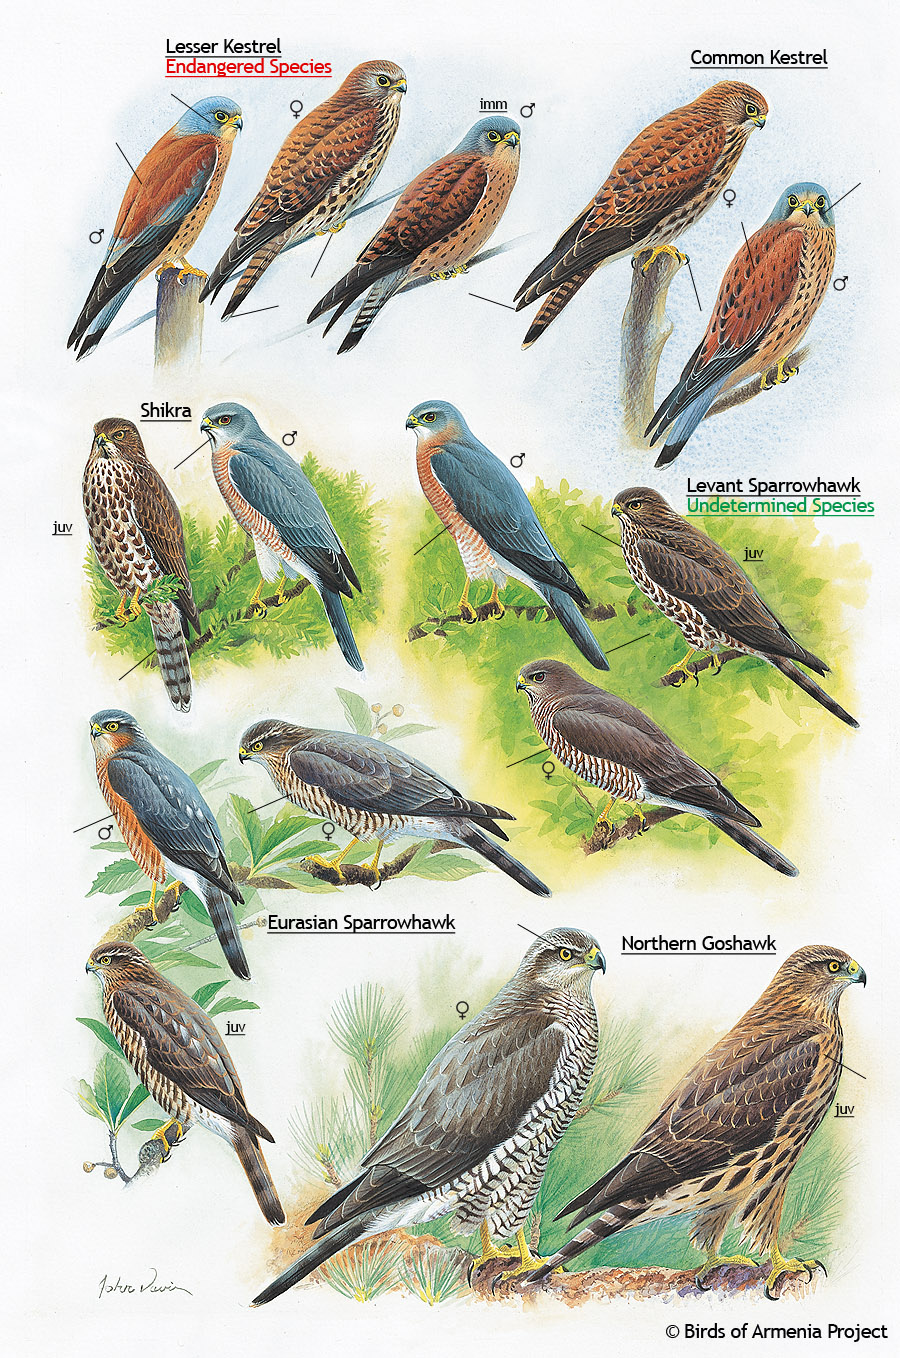 Kestrels, Shikra, Sparrowhawks and Goshawk